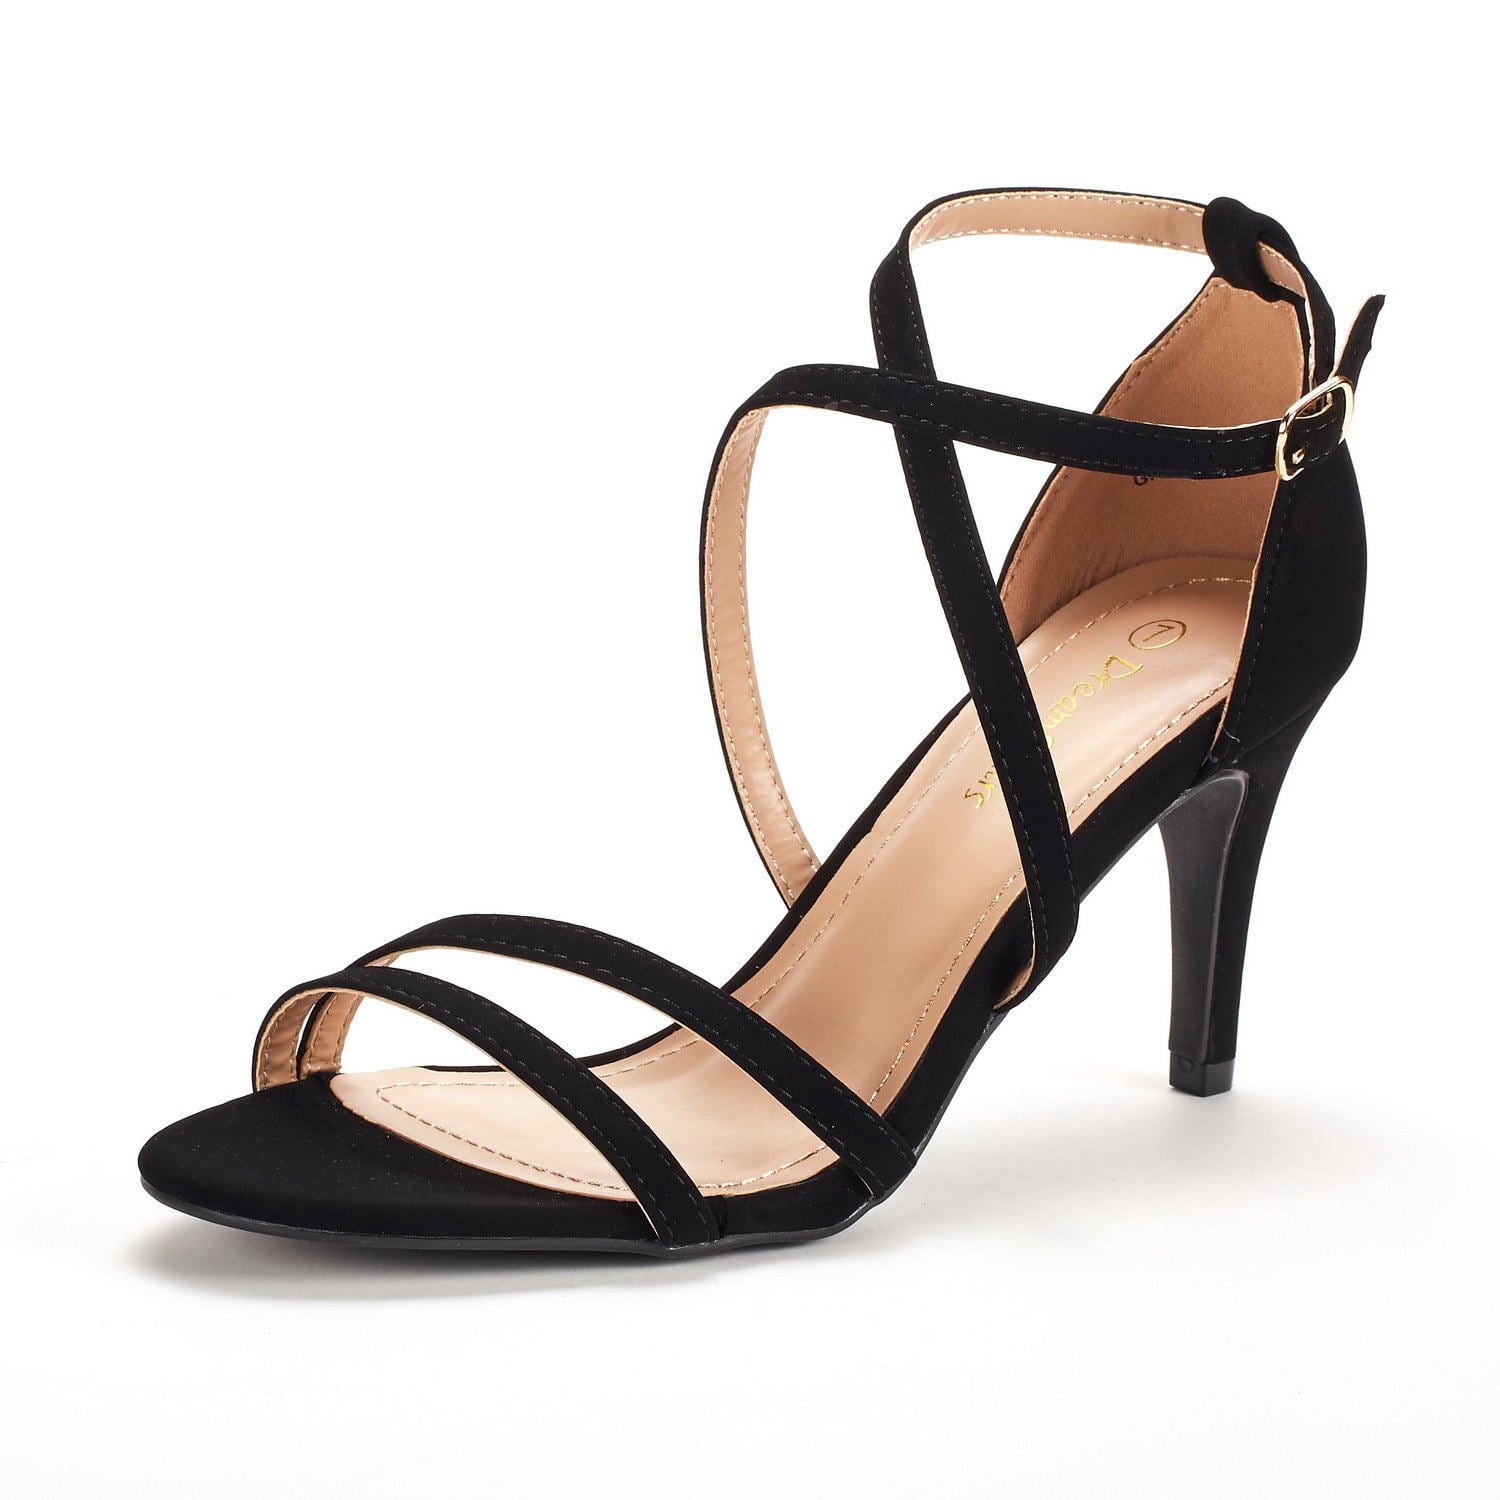 Dream Pairs Women's Ankle Strap High Heel Sandals Wedding Party Dress Shoes GIGI BLACK/NUBUCK Size 9